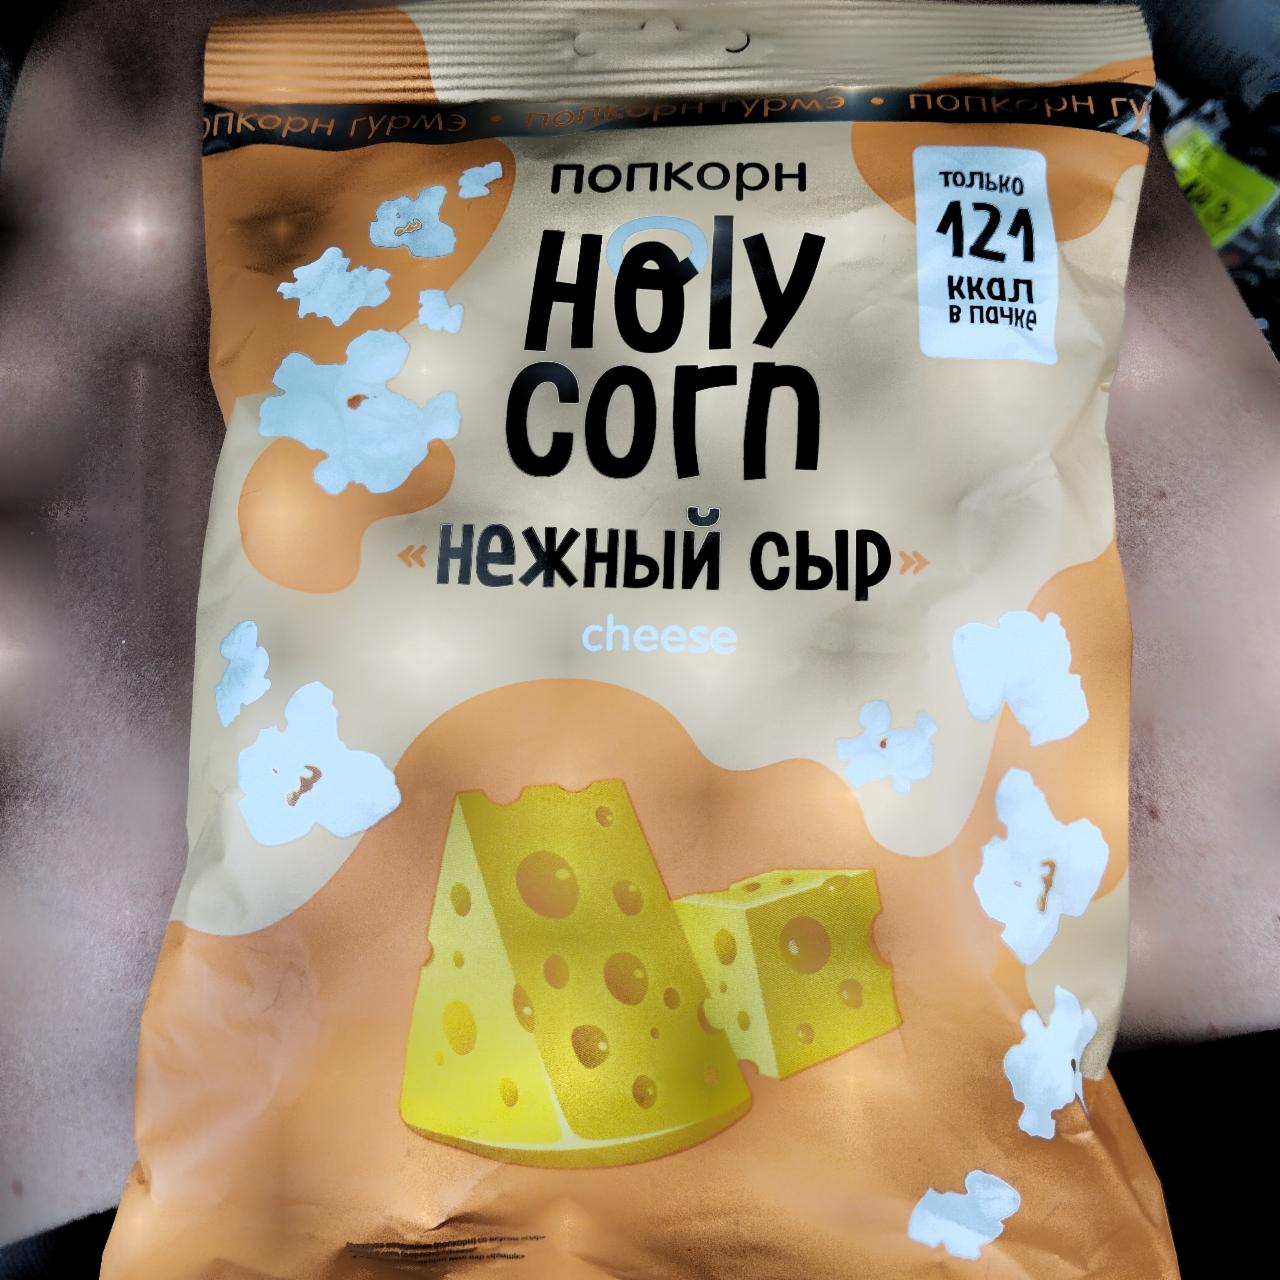 Фото - сырный попкорн Holy corn